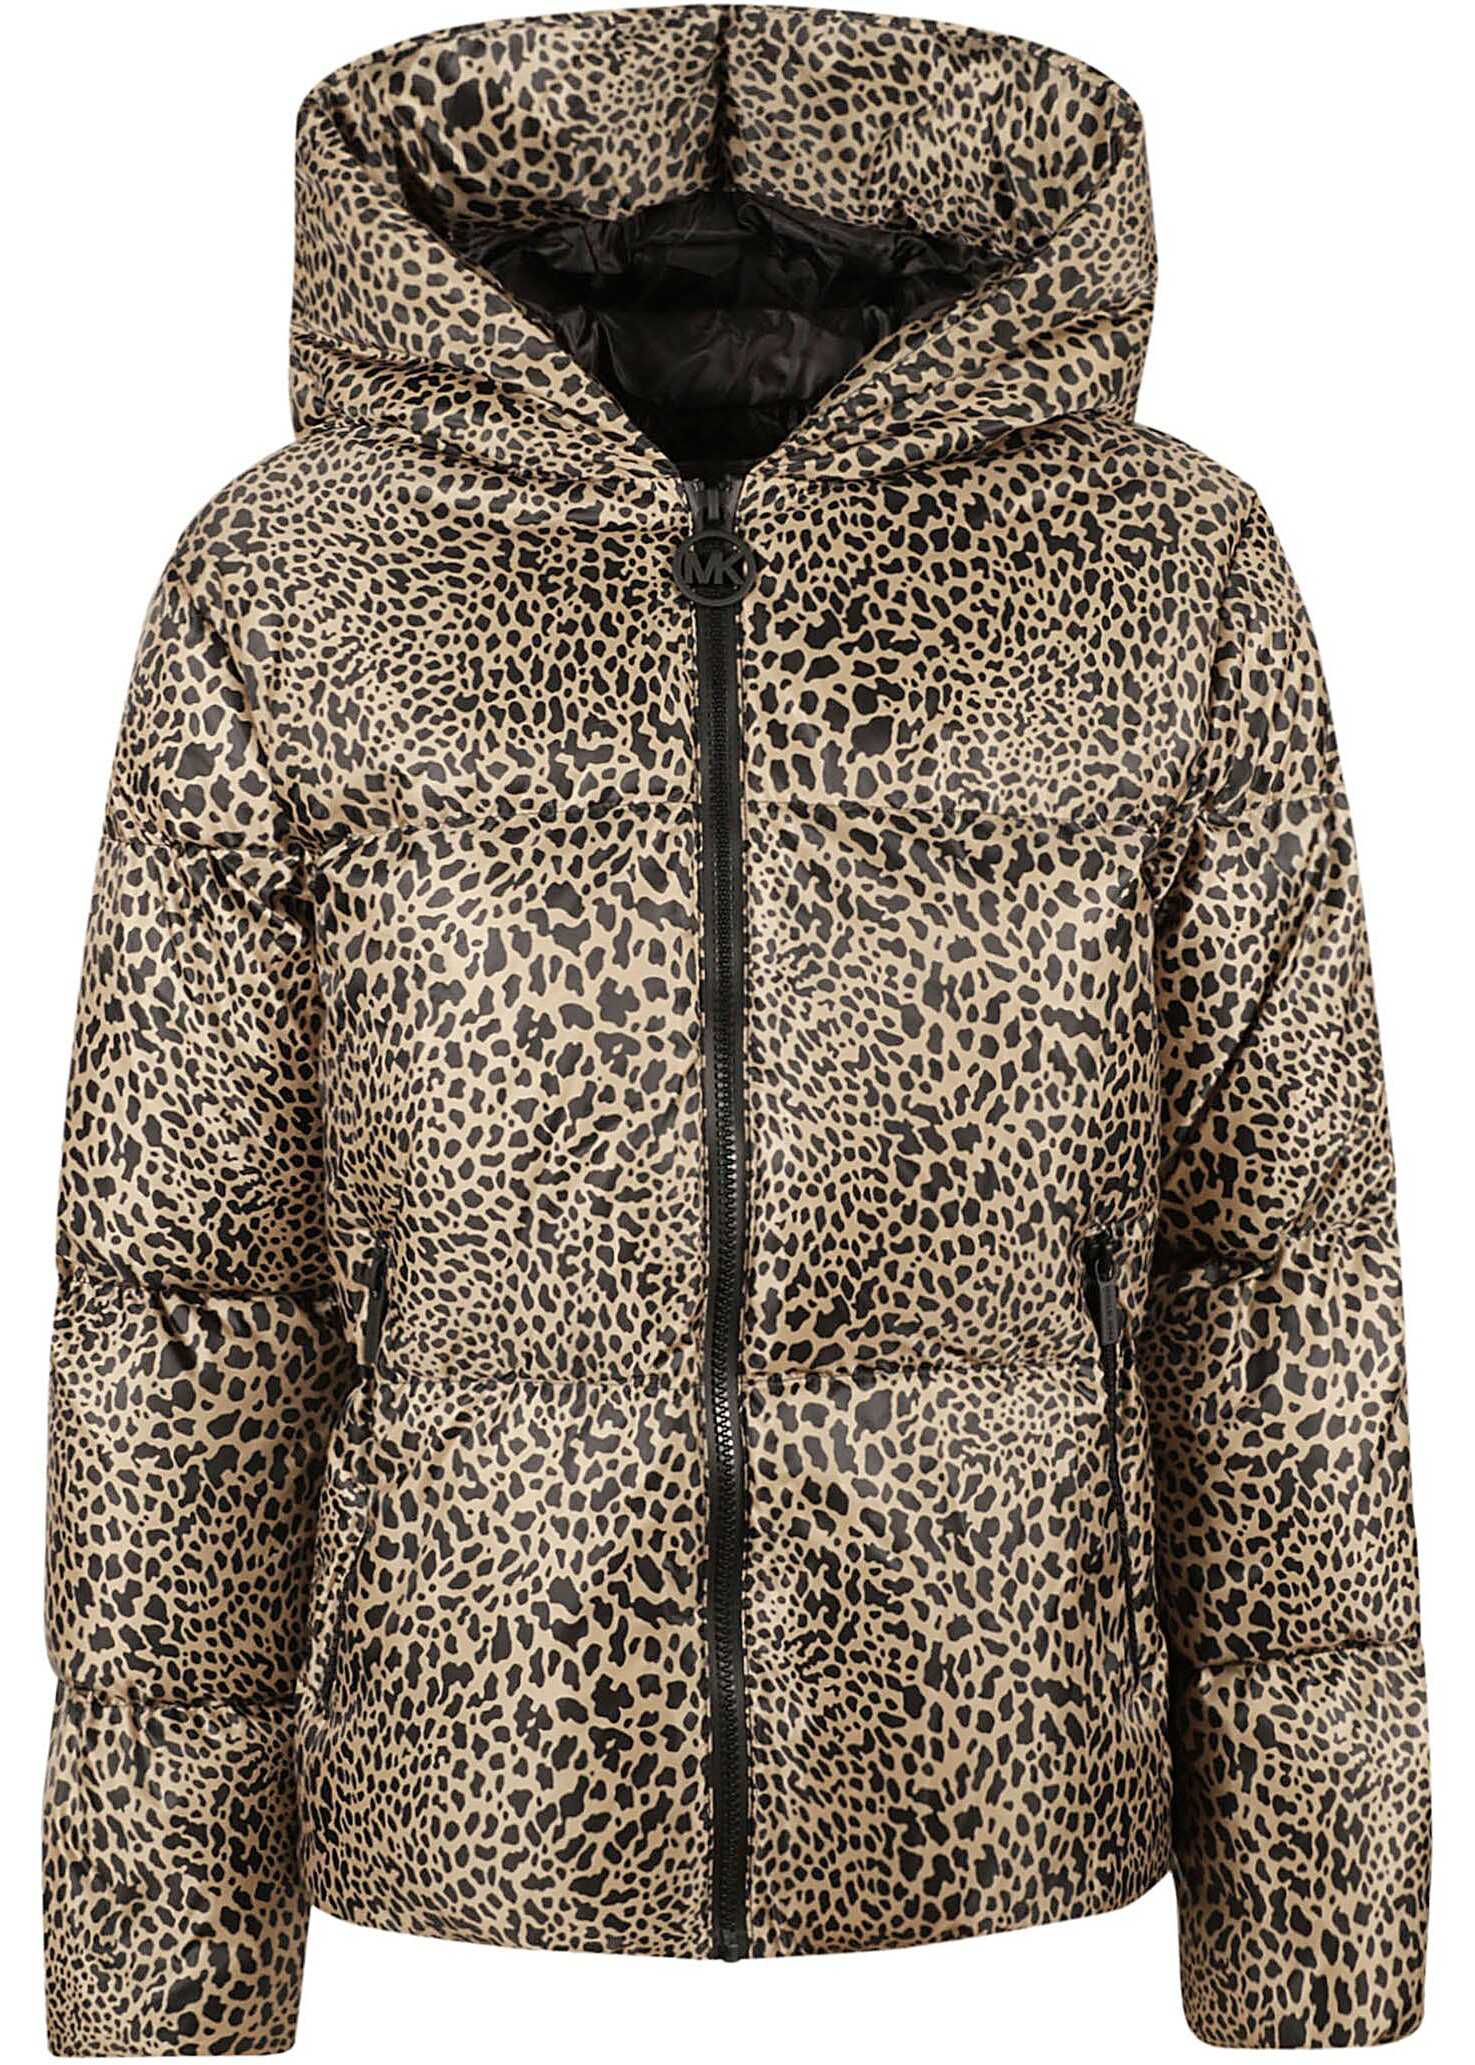 Michael Kors Polyester Outerwear Jacket BEIGE